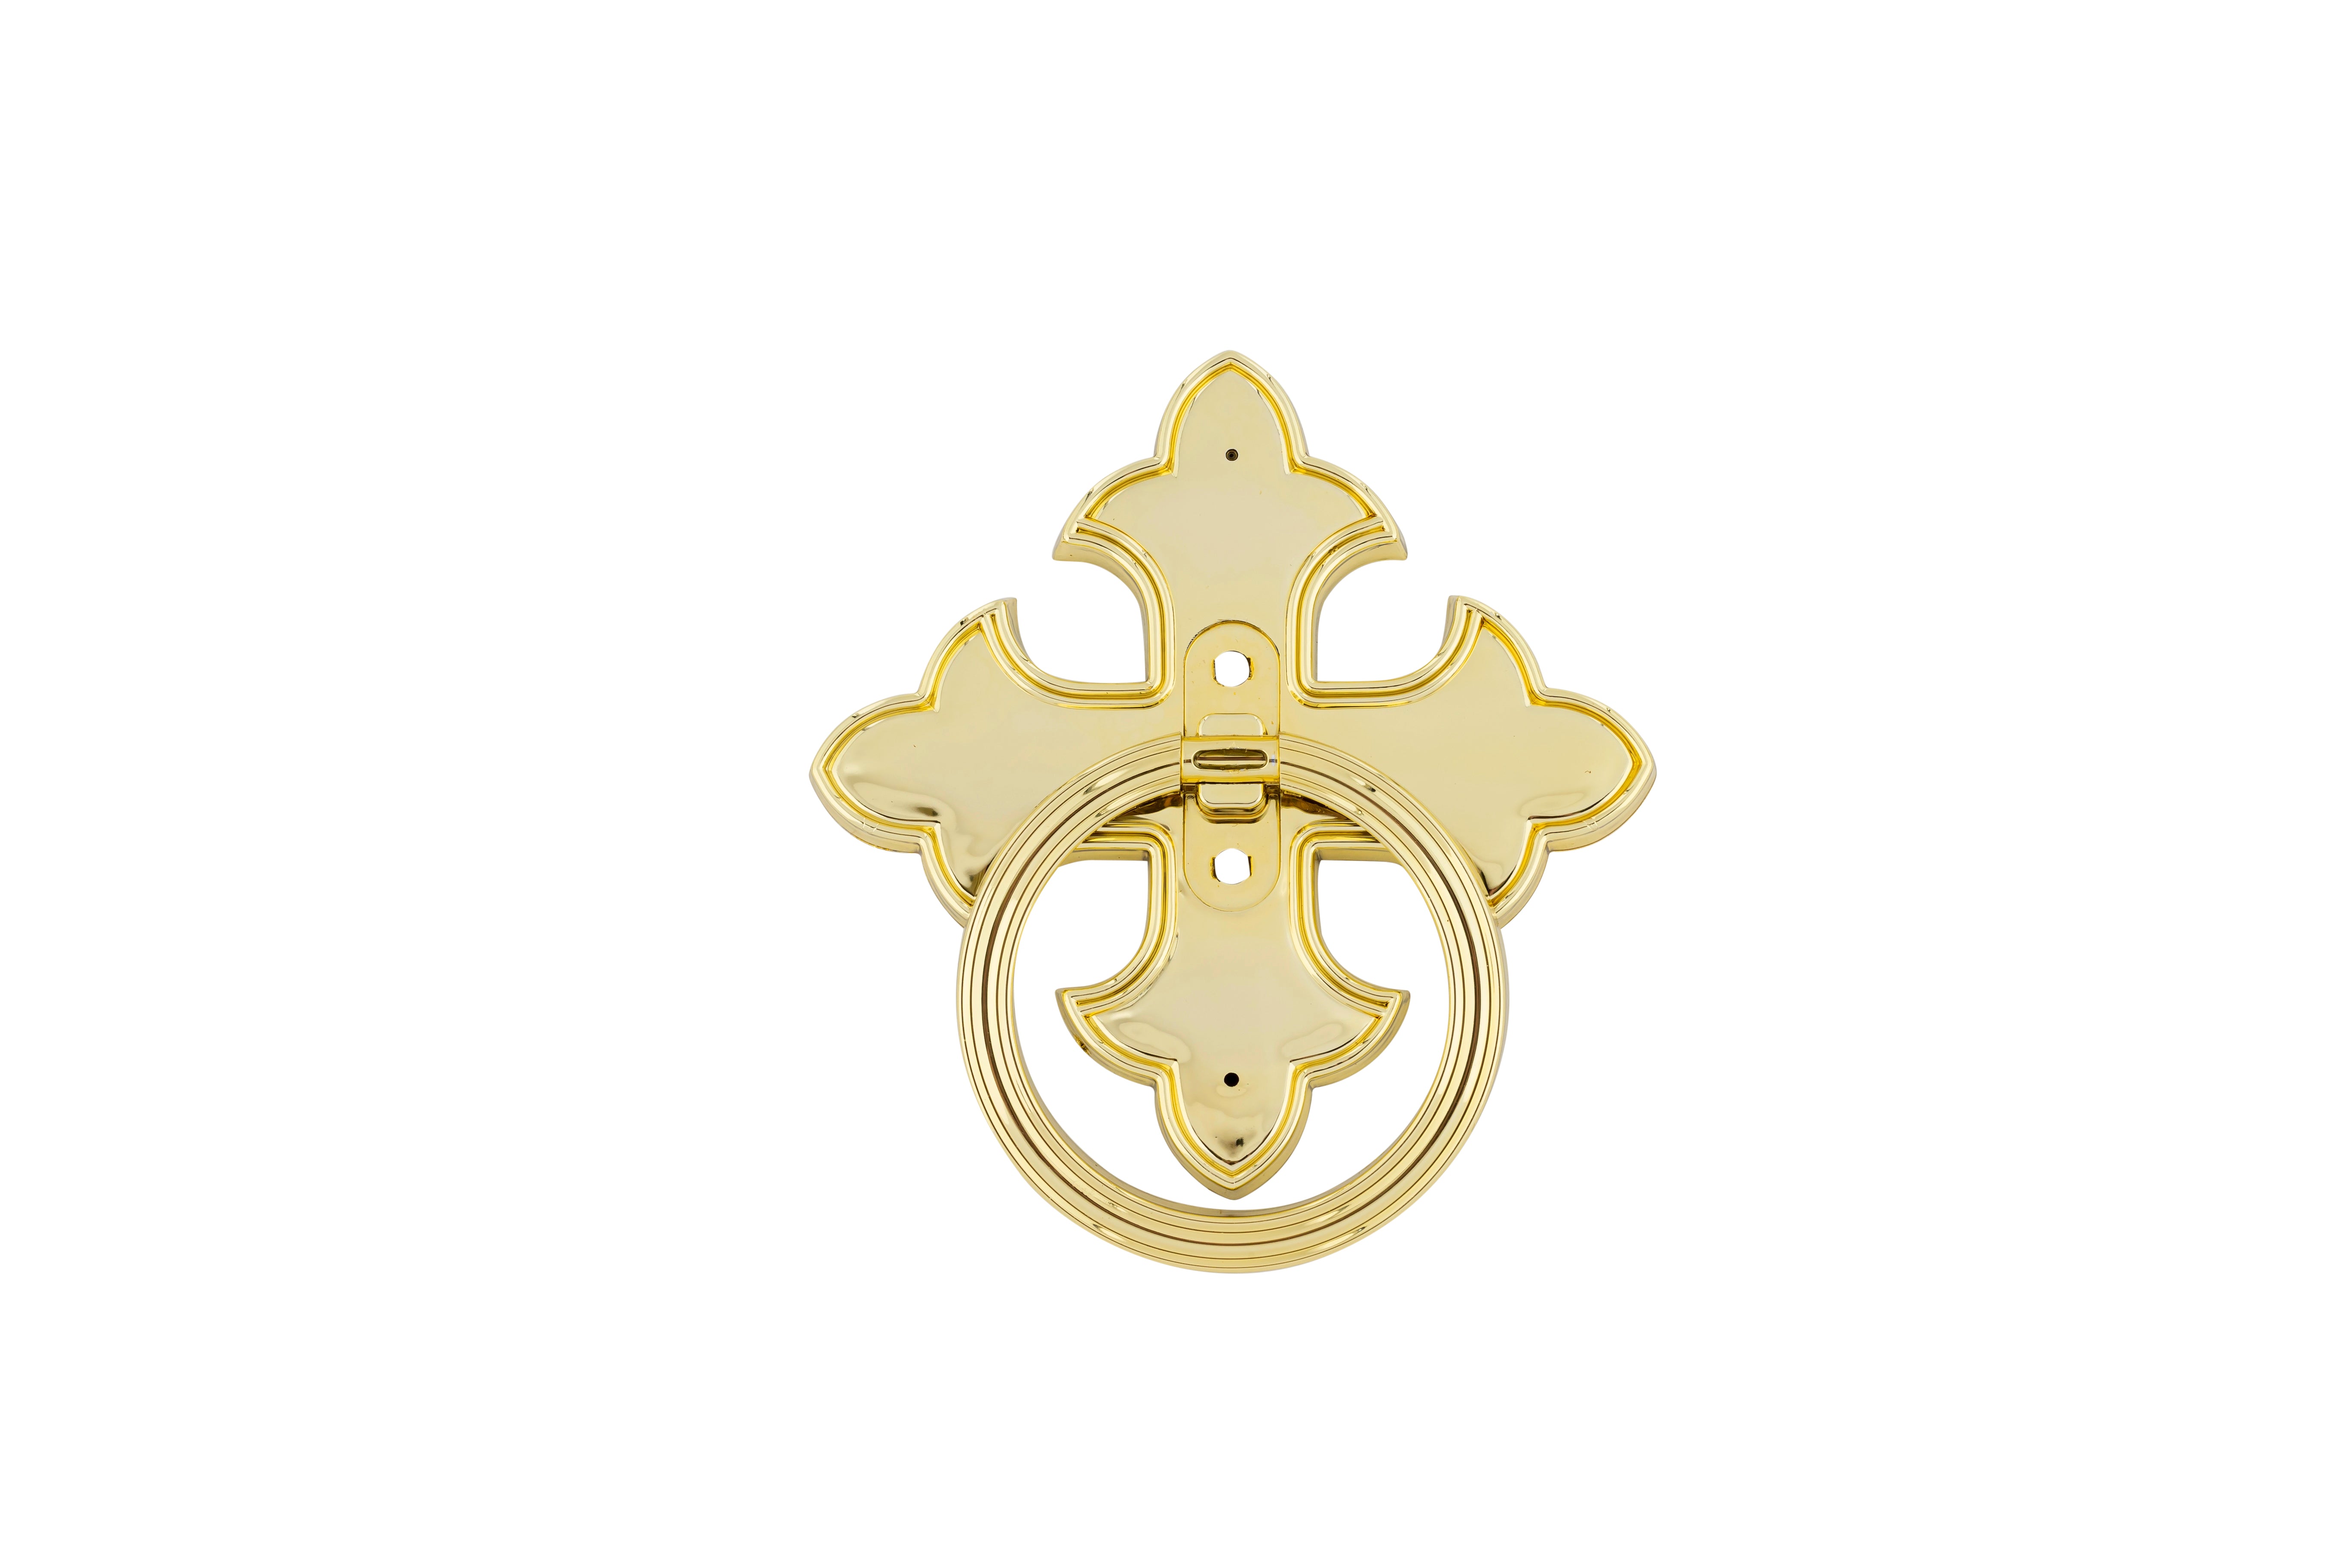 Cantebury Plastic Ring Handle Gold - 6 piece set